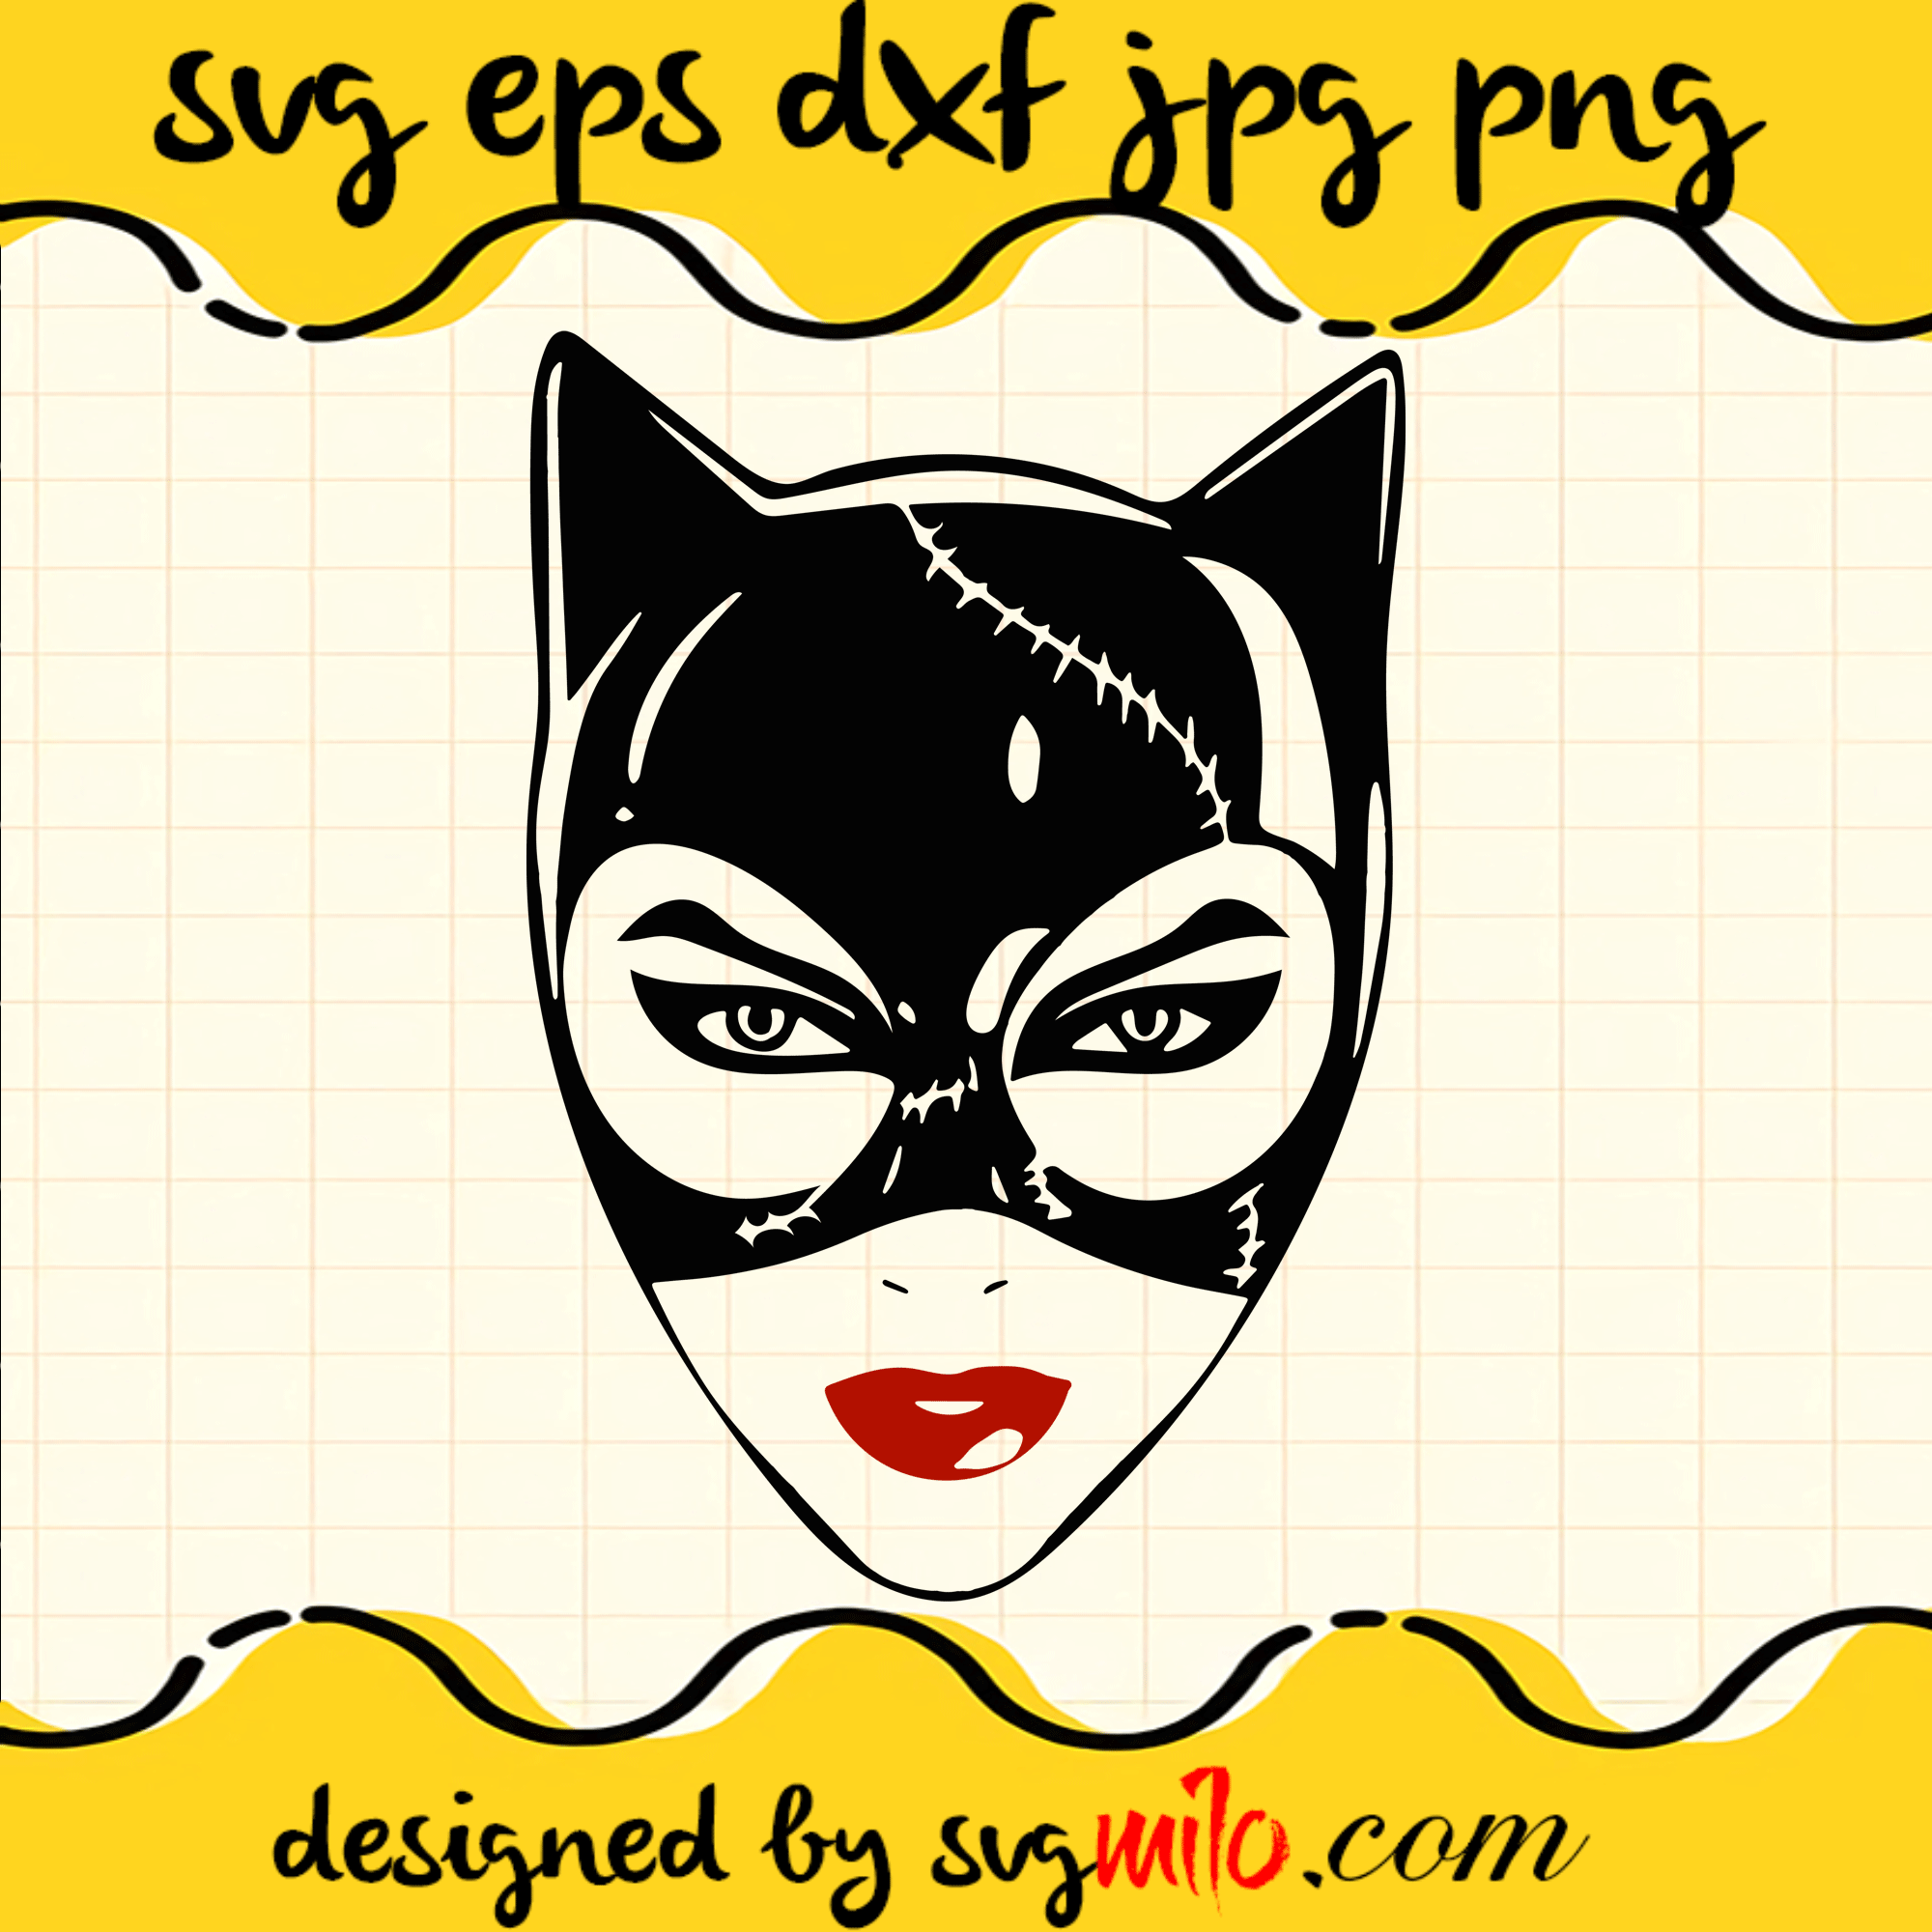 Catwoman SVG, Superhero Clipart Catwoman Face SVG, Cat SVG, Halloween SVG, EPS, PNG, DXF, Premium Quality - SVGMILO